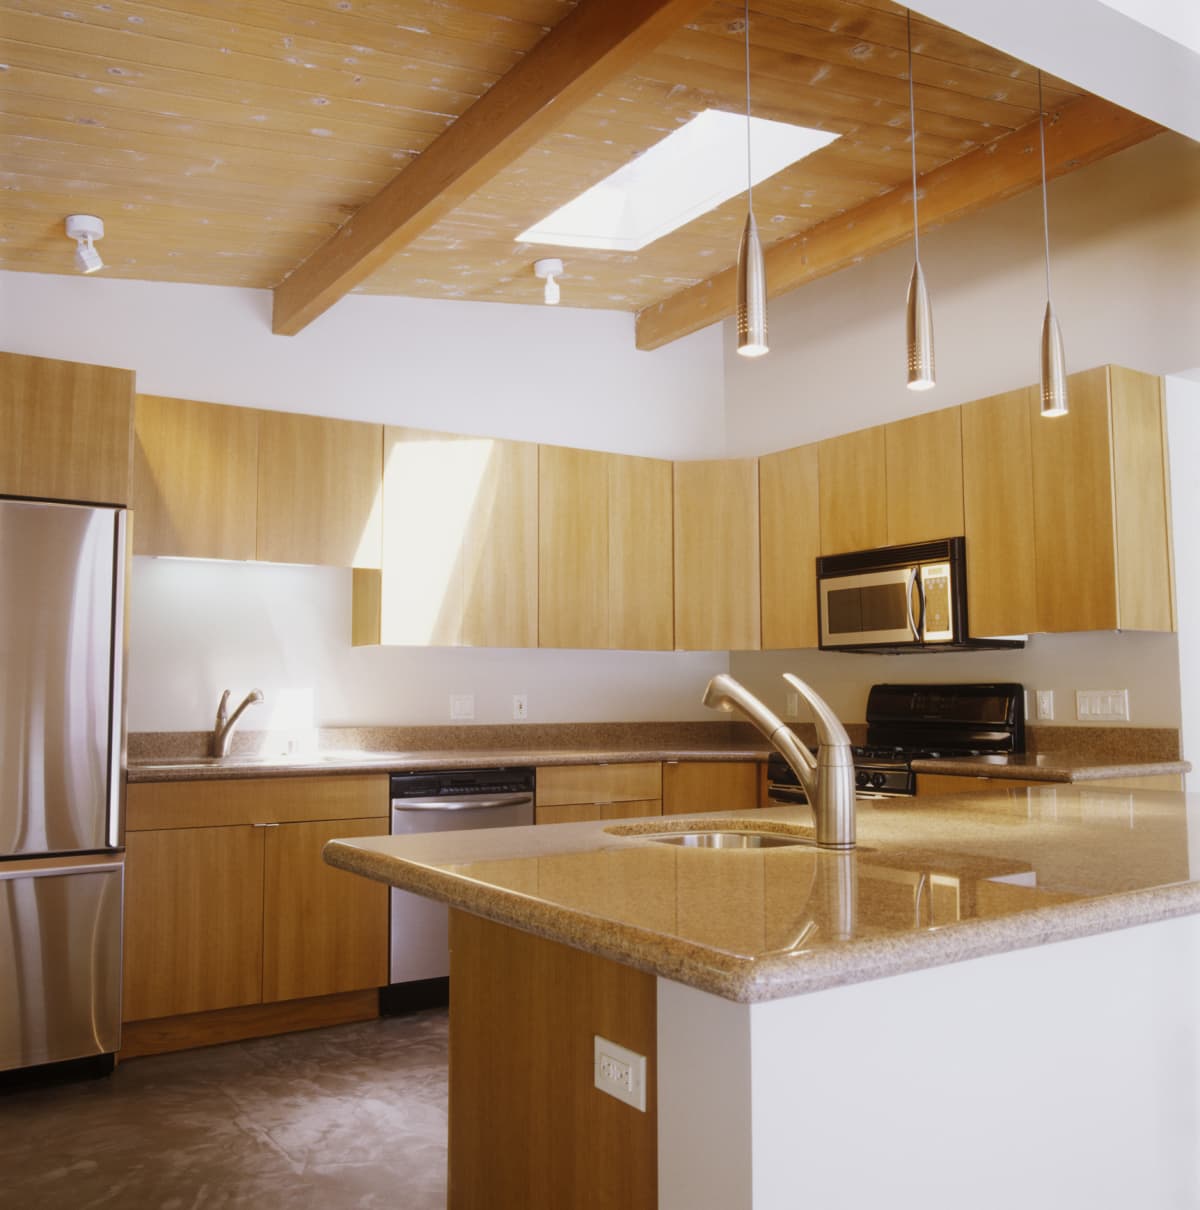 Minimalist kitchen with blond wood cabinets